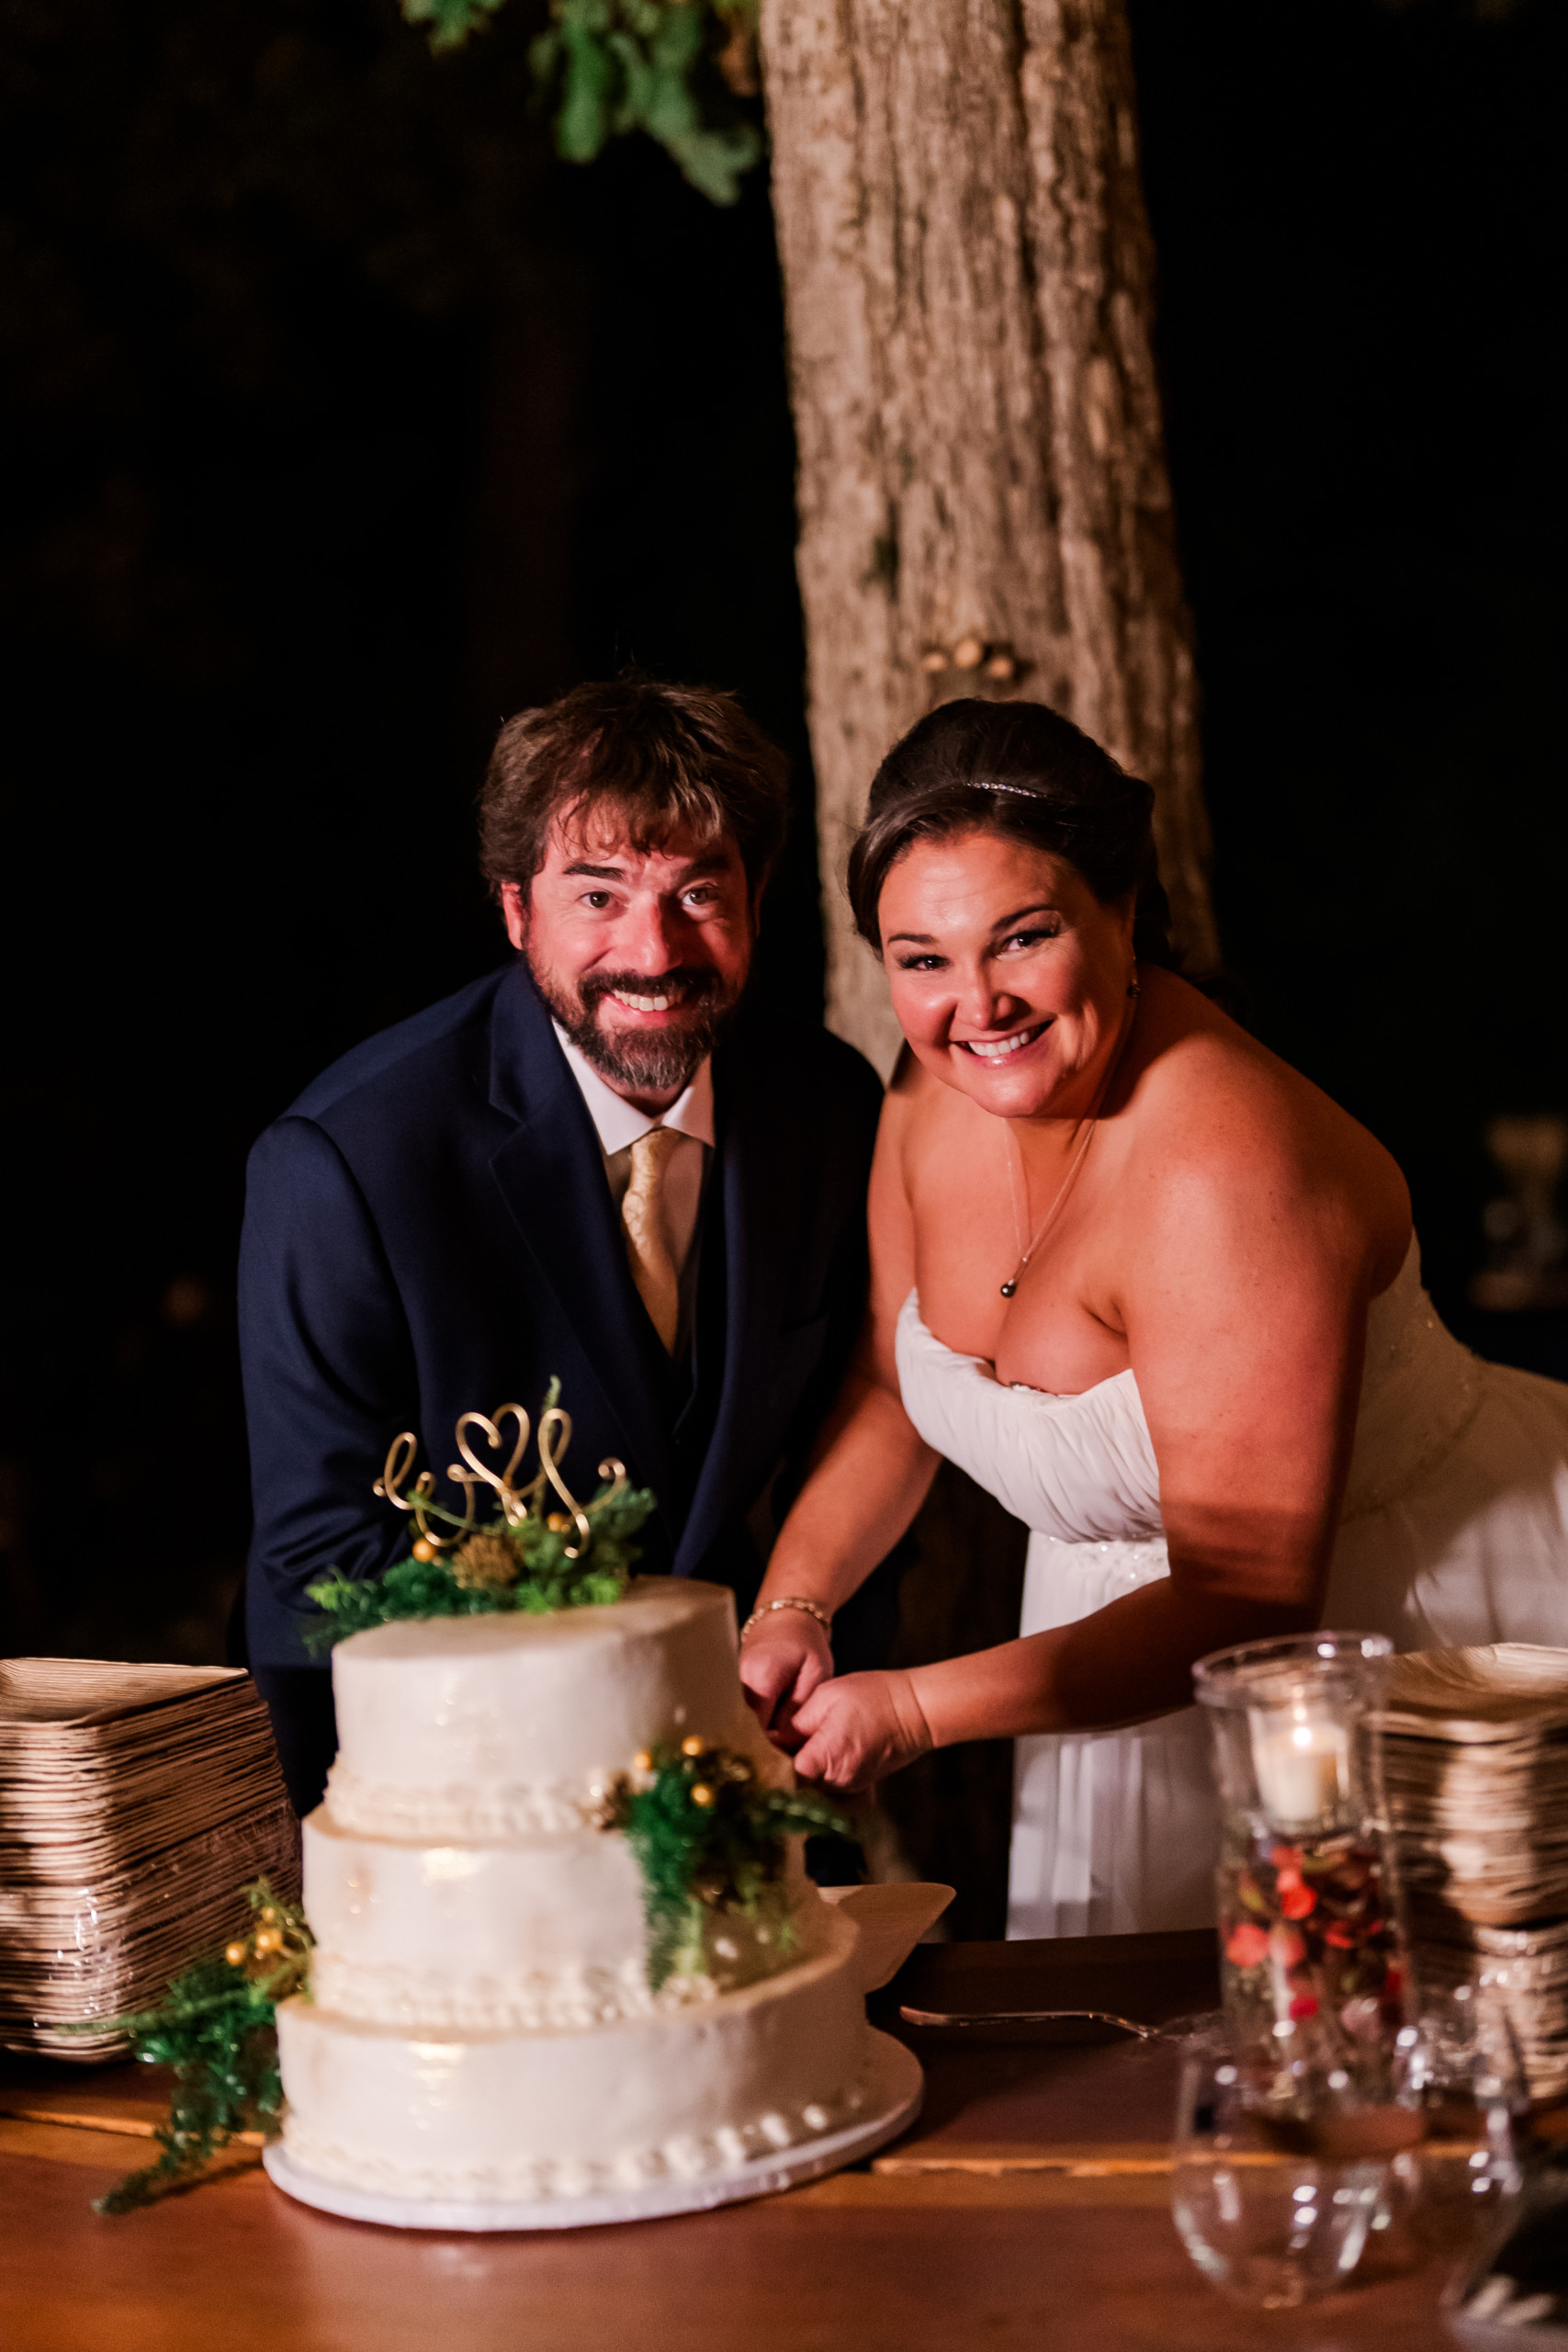 Cake Cutting A Tennessee Wedding